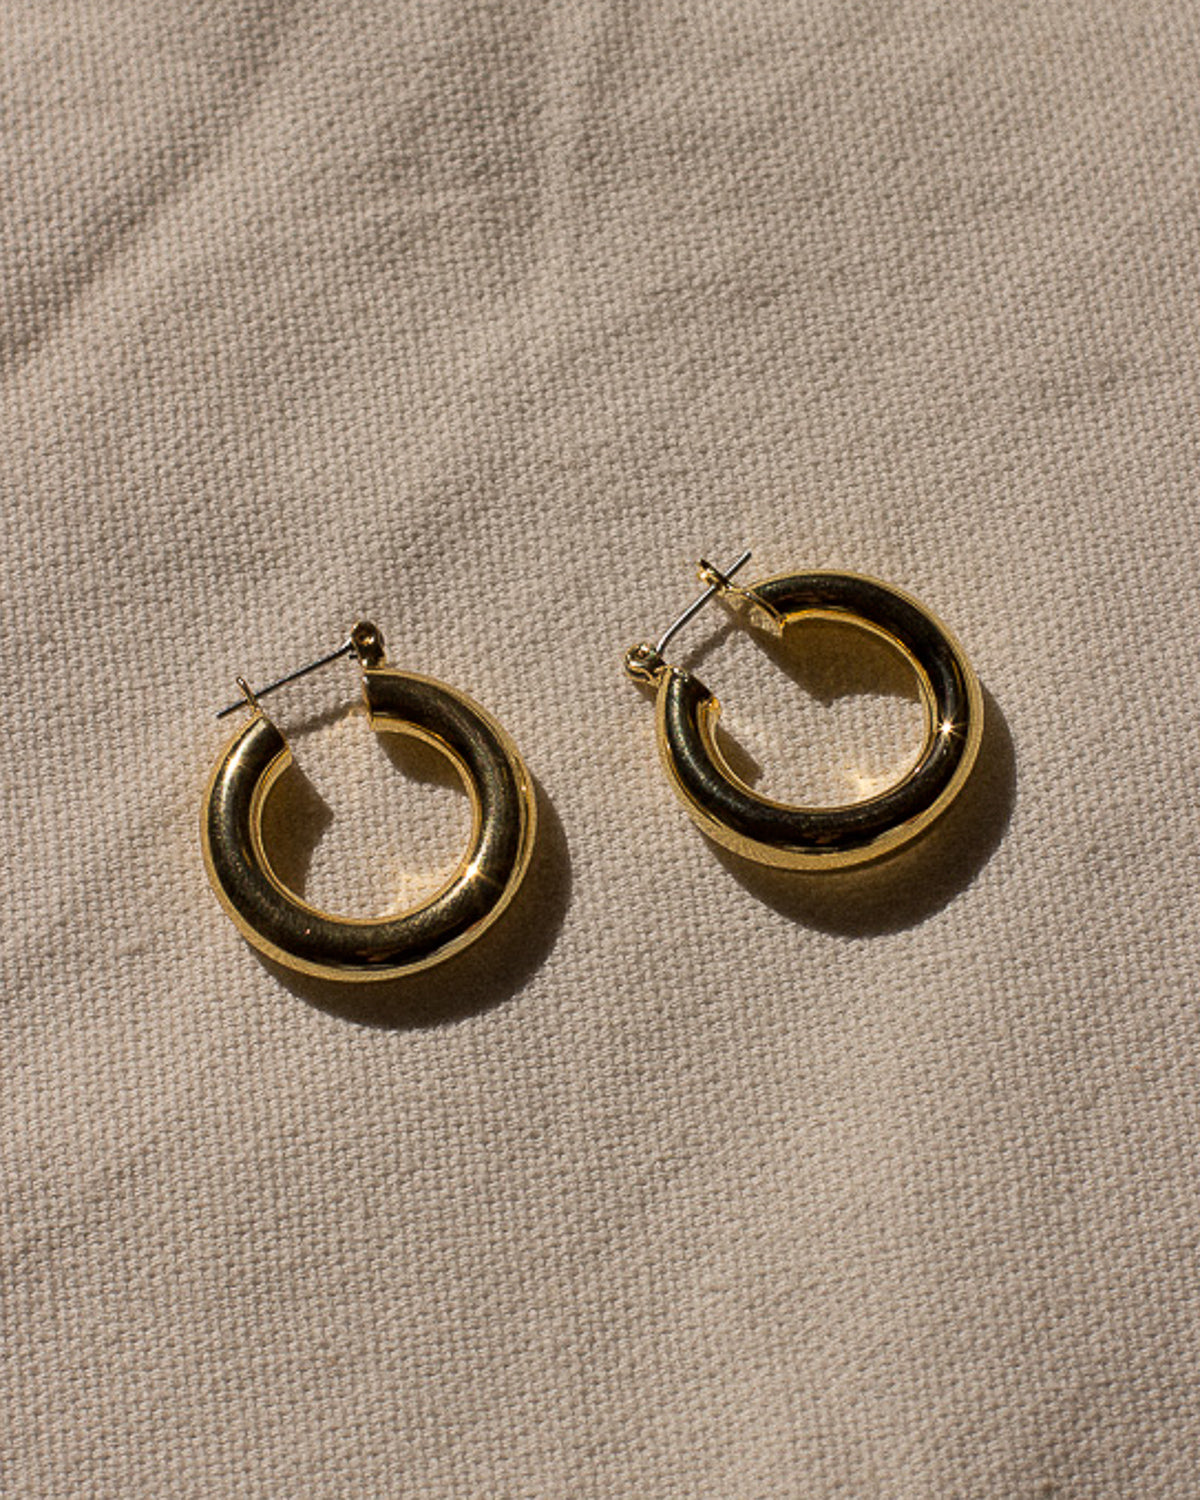 Luv Aj Baby Amalfi Tube Hoop Earrings in Polished 14k Antique Gold Plated